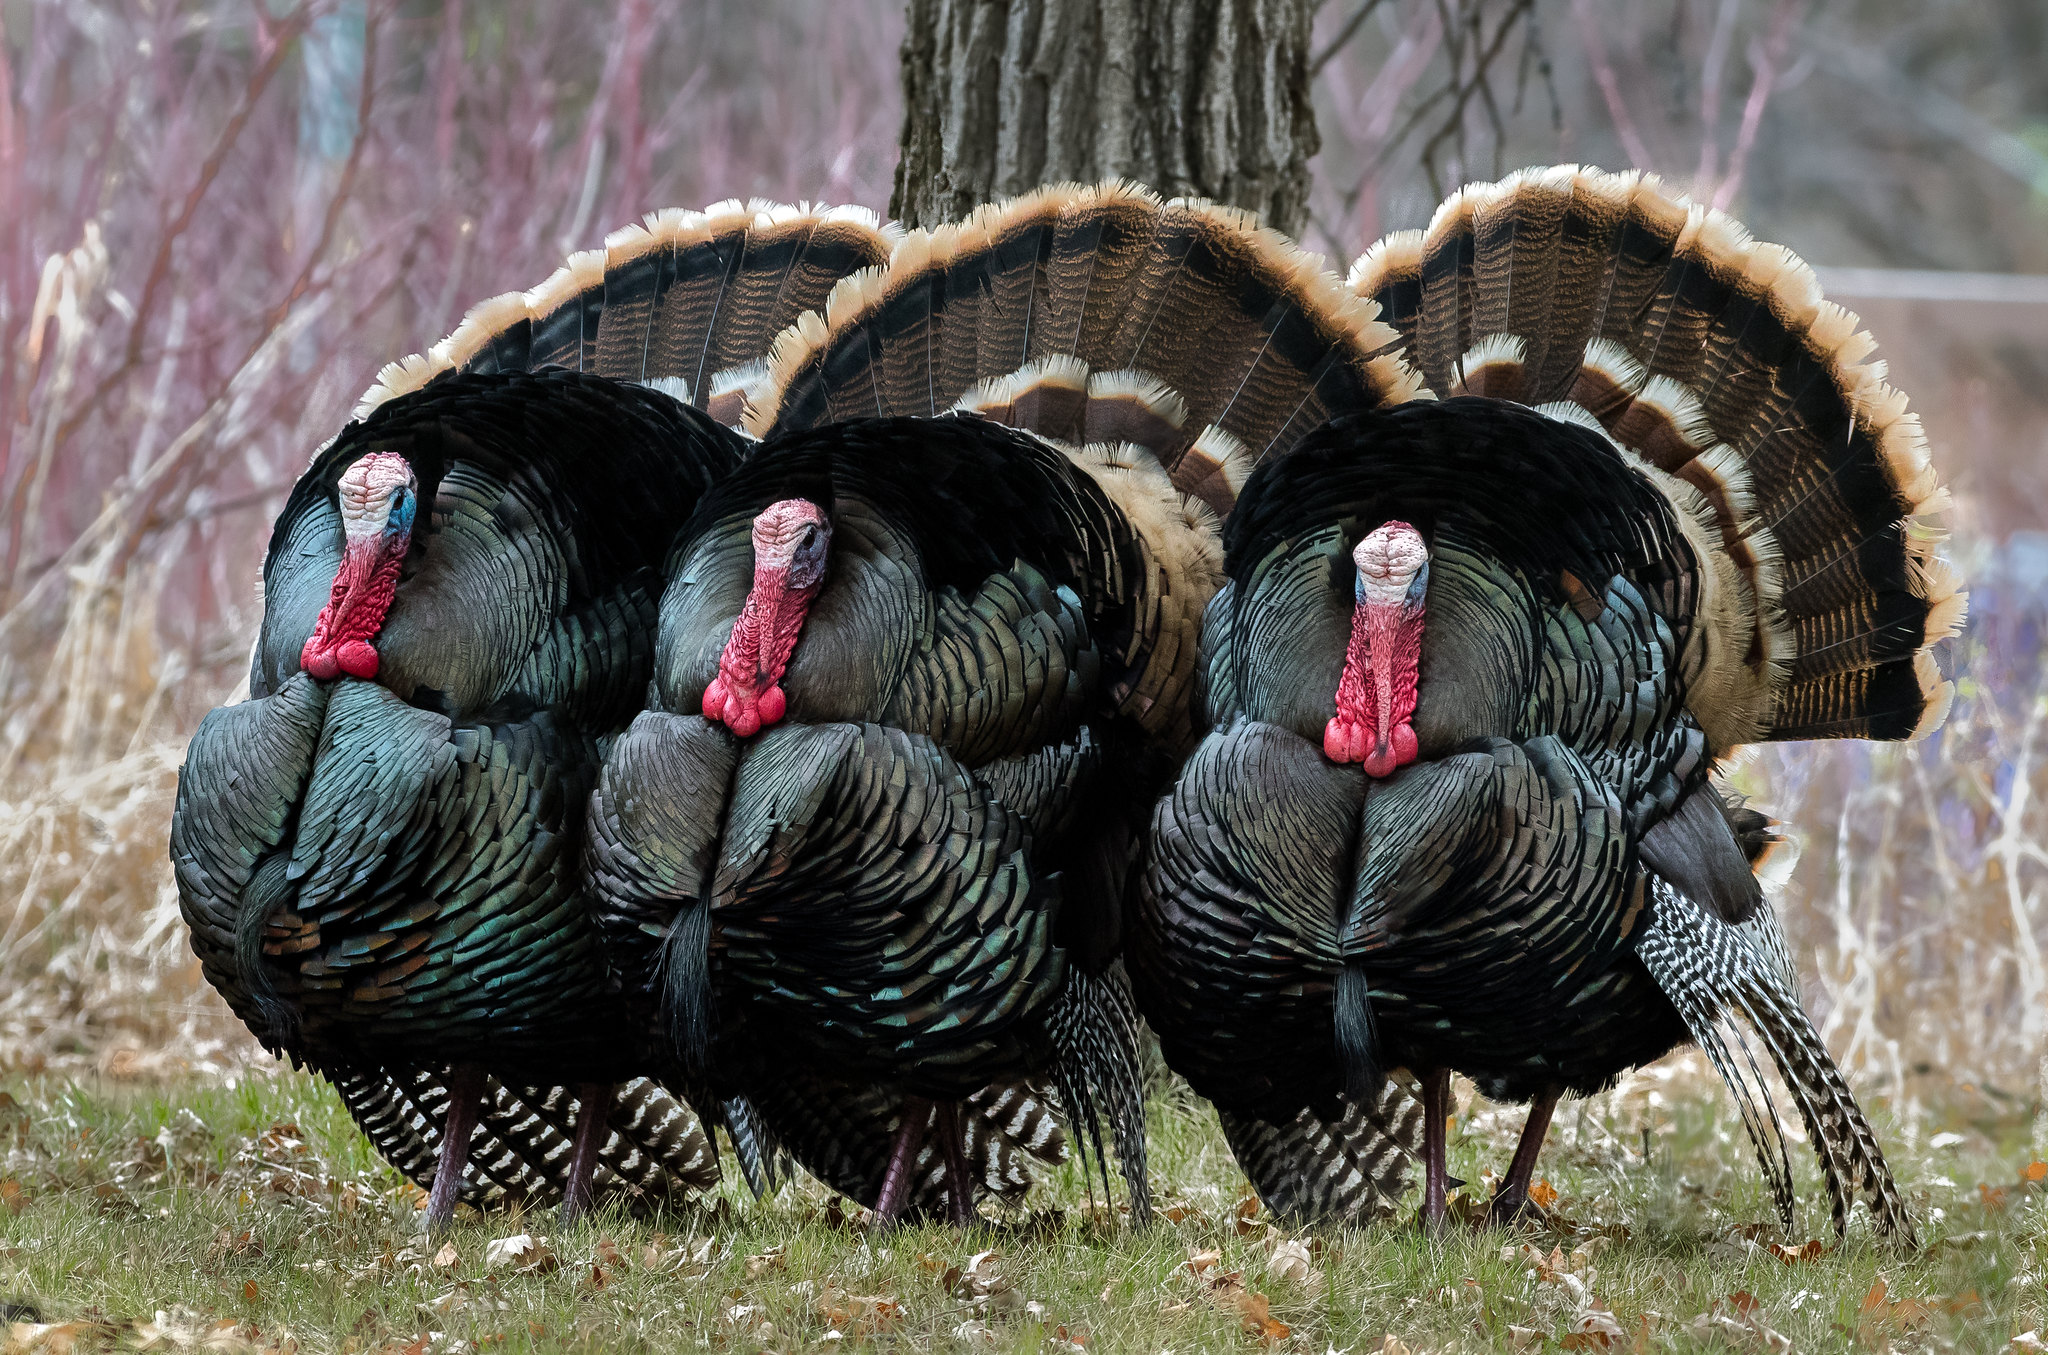 PsBattle: 3 Wild Turkeys In South Dakota, USA : r/photoshopbattles